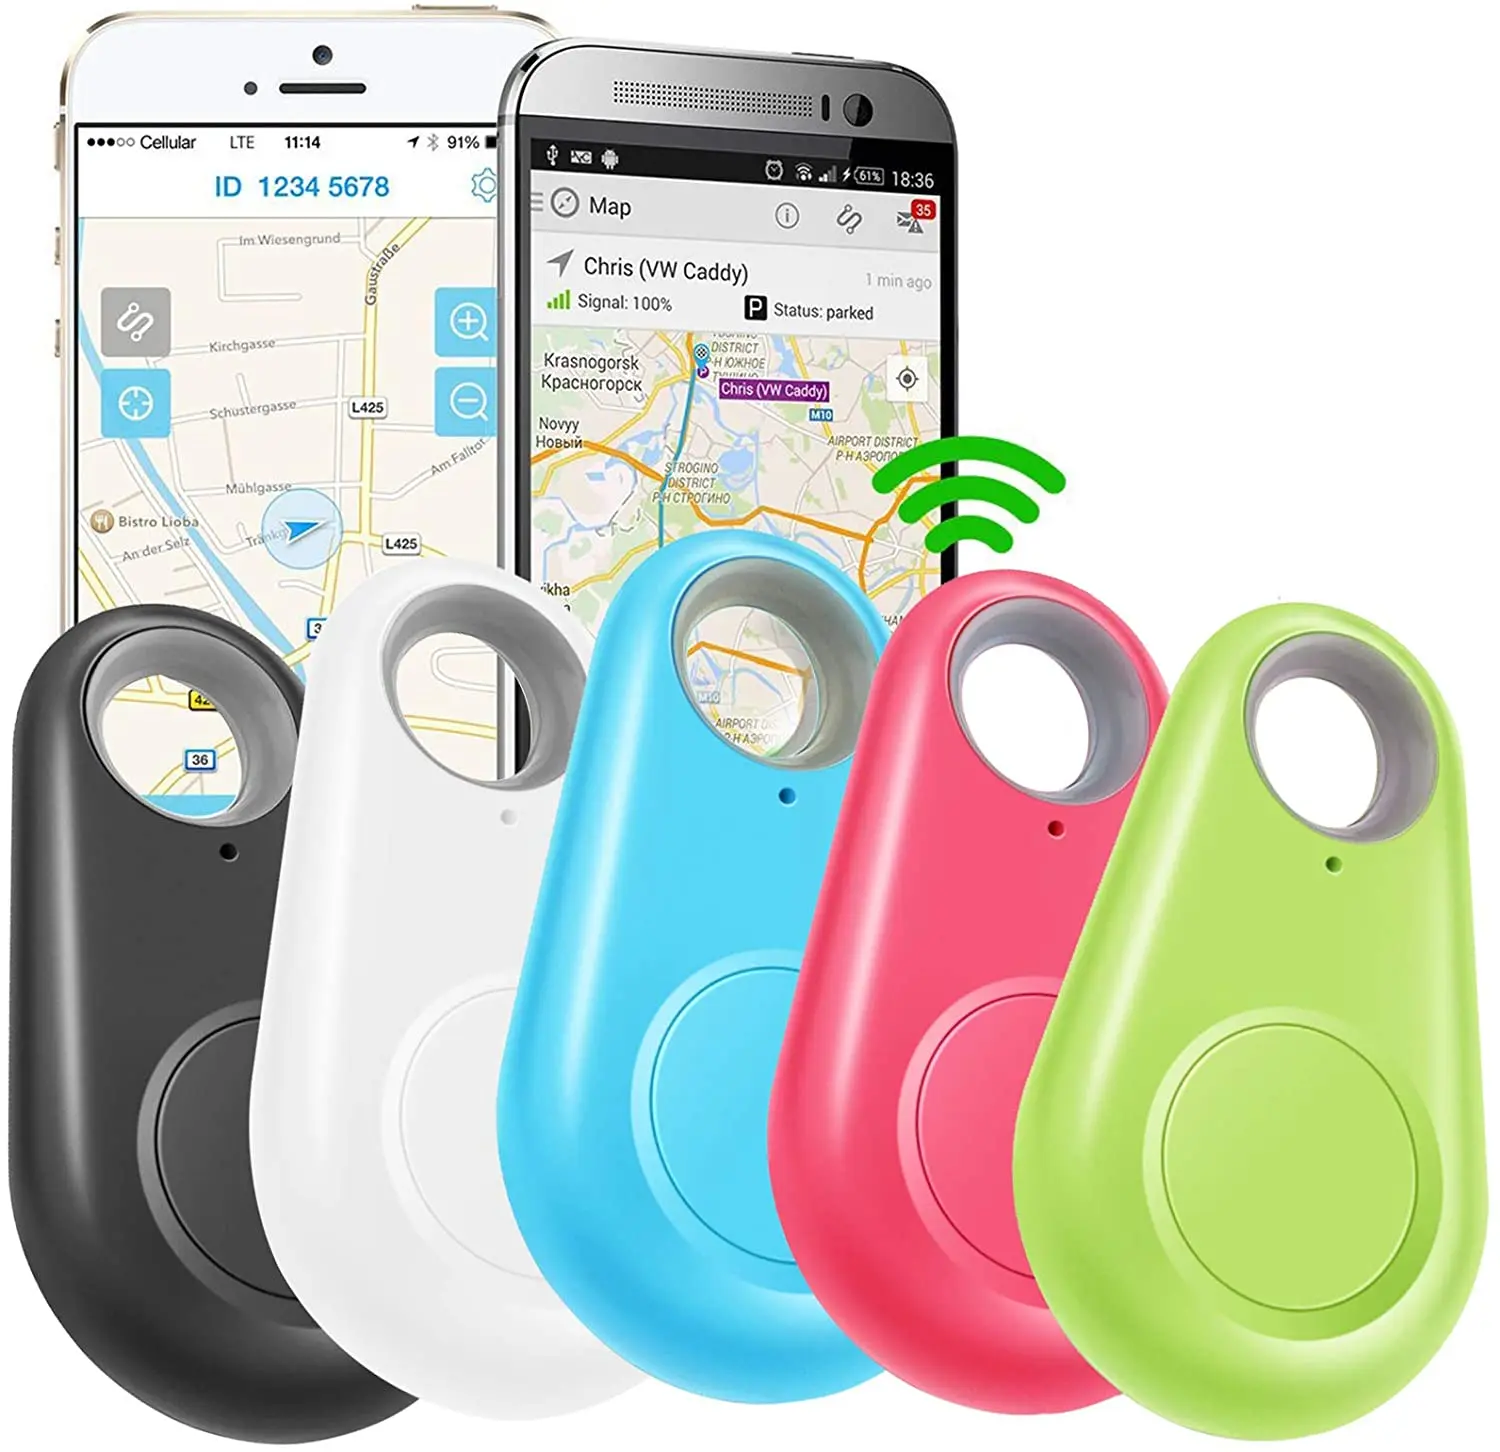 Keychain Whistle Smart Gps Tracker Wireless Alarm Anti Key Finder Buy Key Finder,Lost Key Finder,Key Finder Gps Product on Alibaba.com